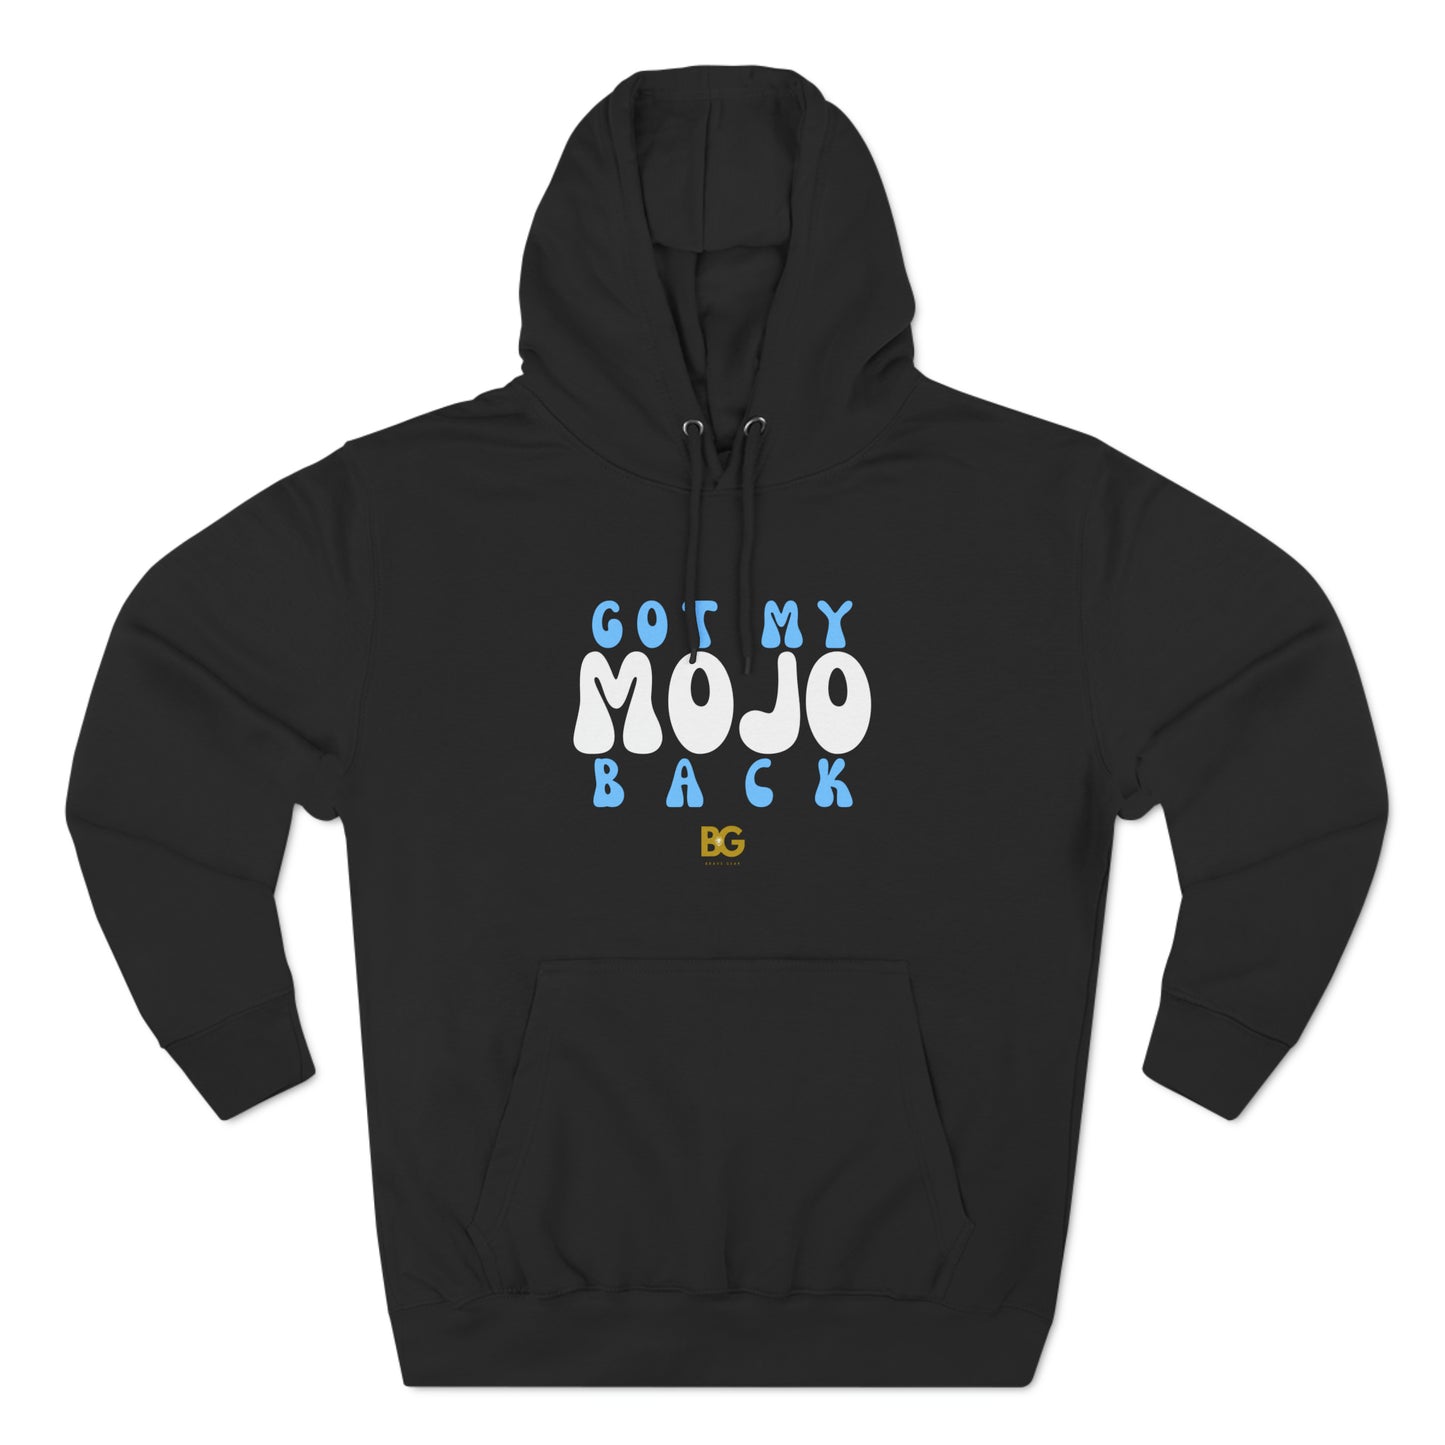 BG "Got my MOJO back" Premium Pullover Hoodie